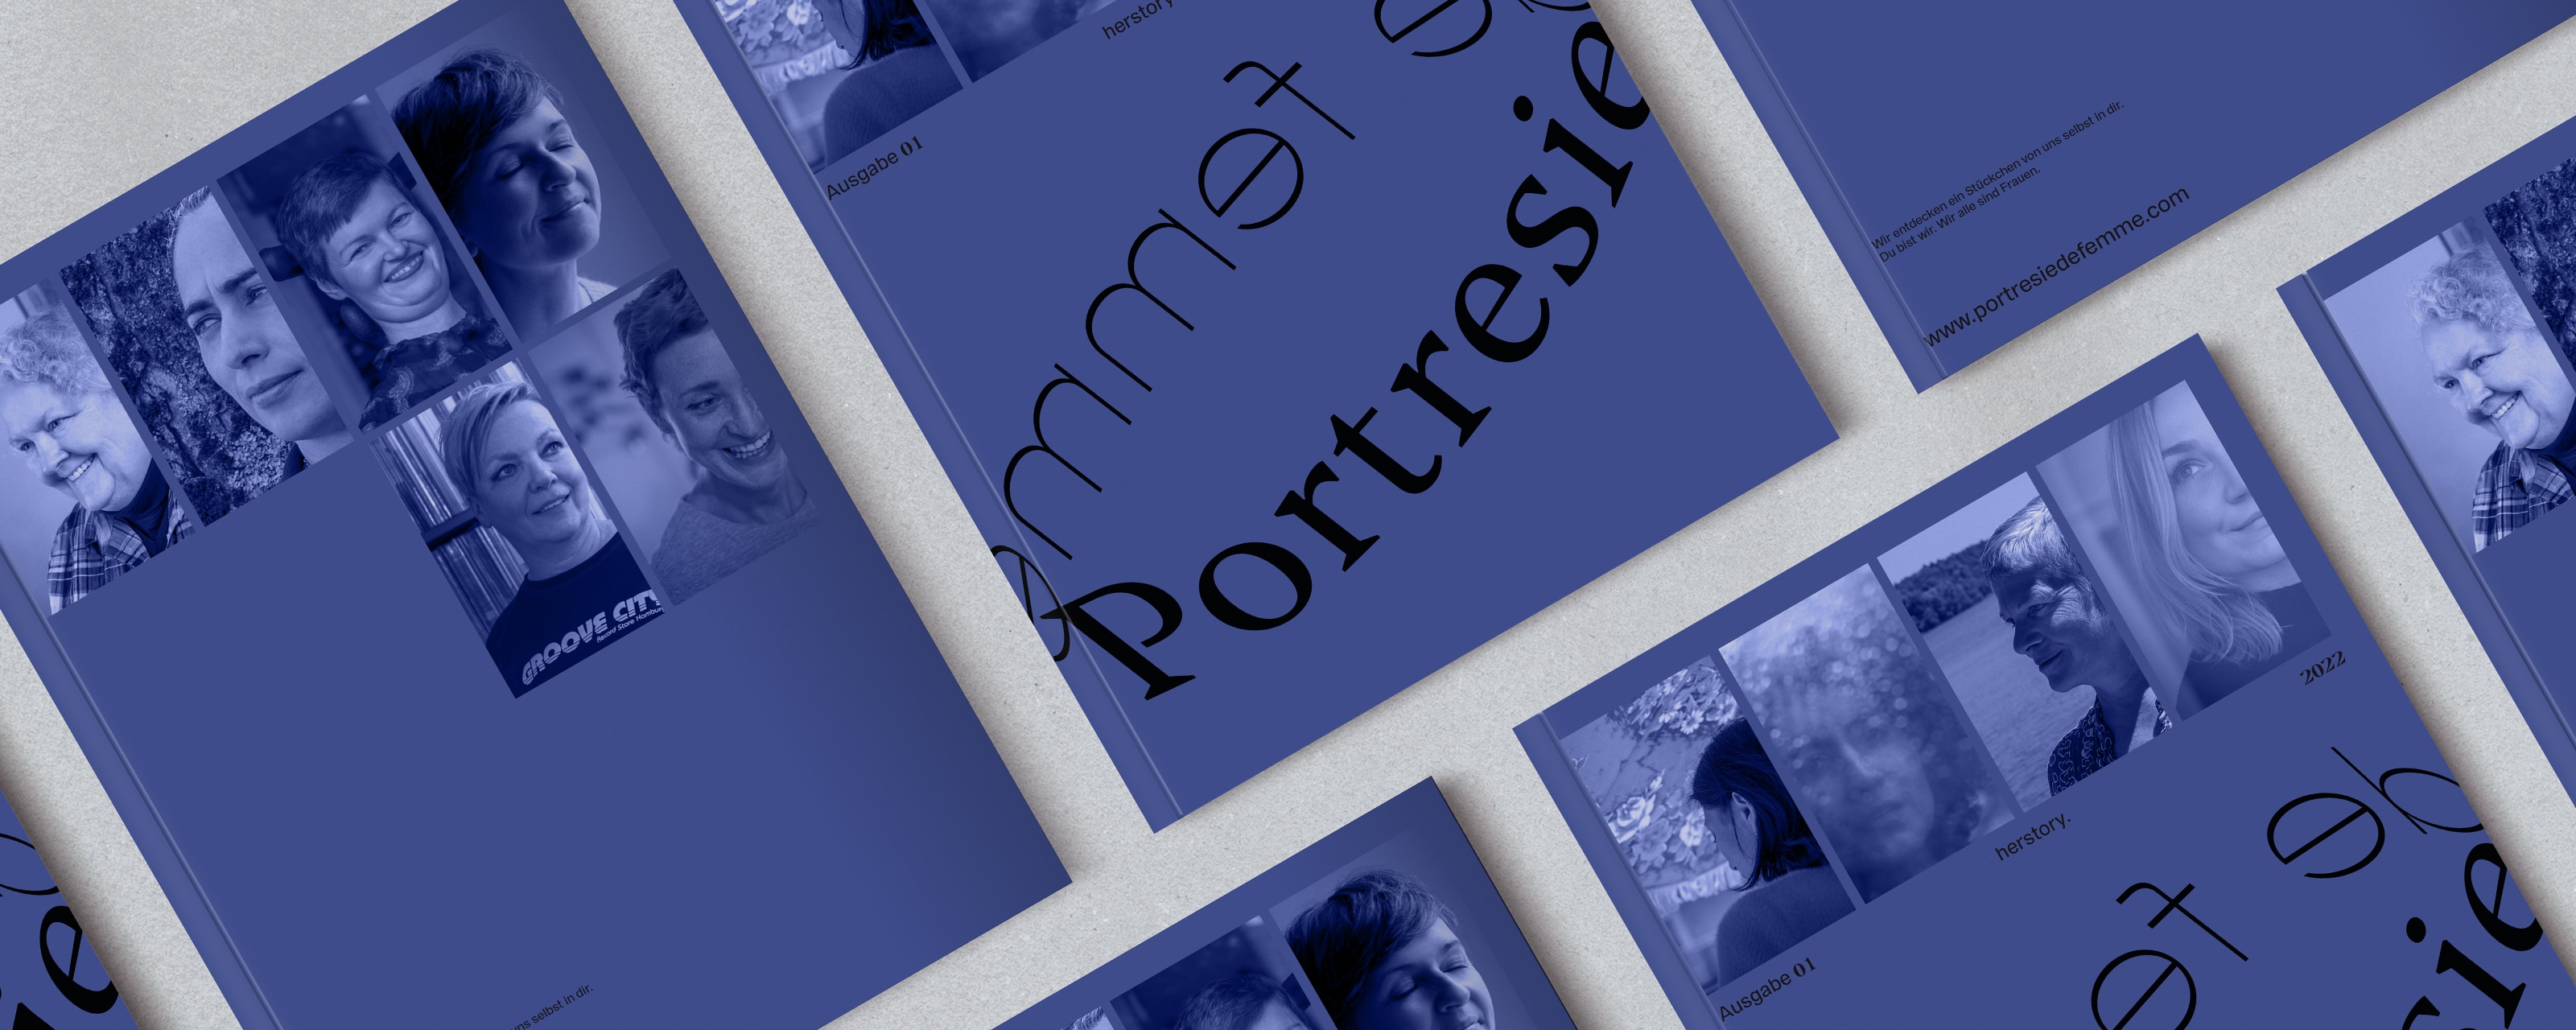 Portresie de femme Magazin, Editorial Design, Magazingestaltung, Cover